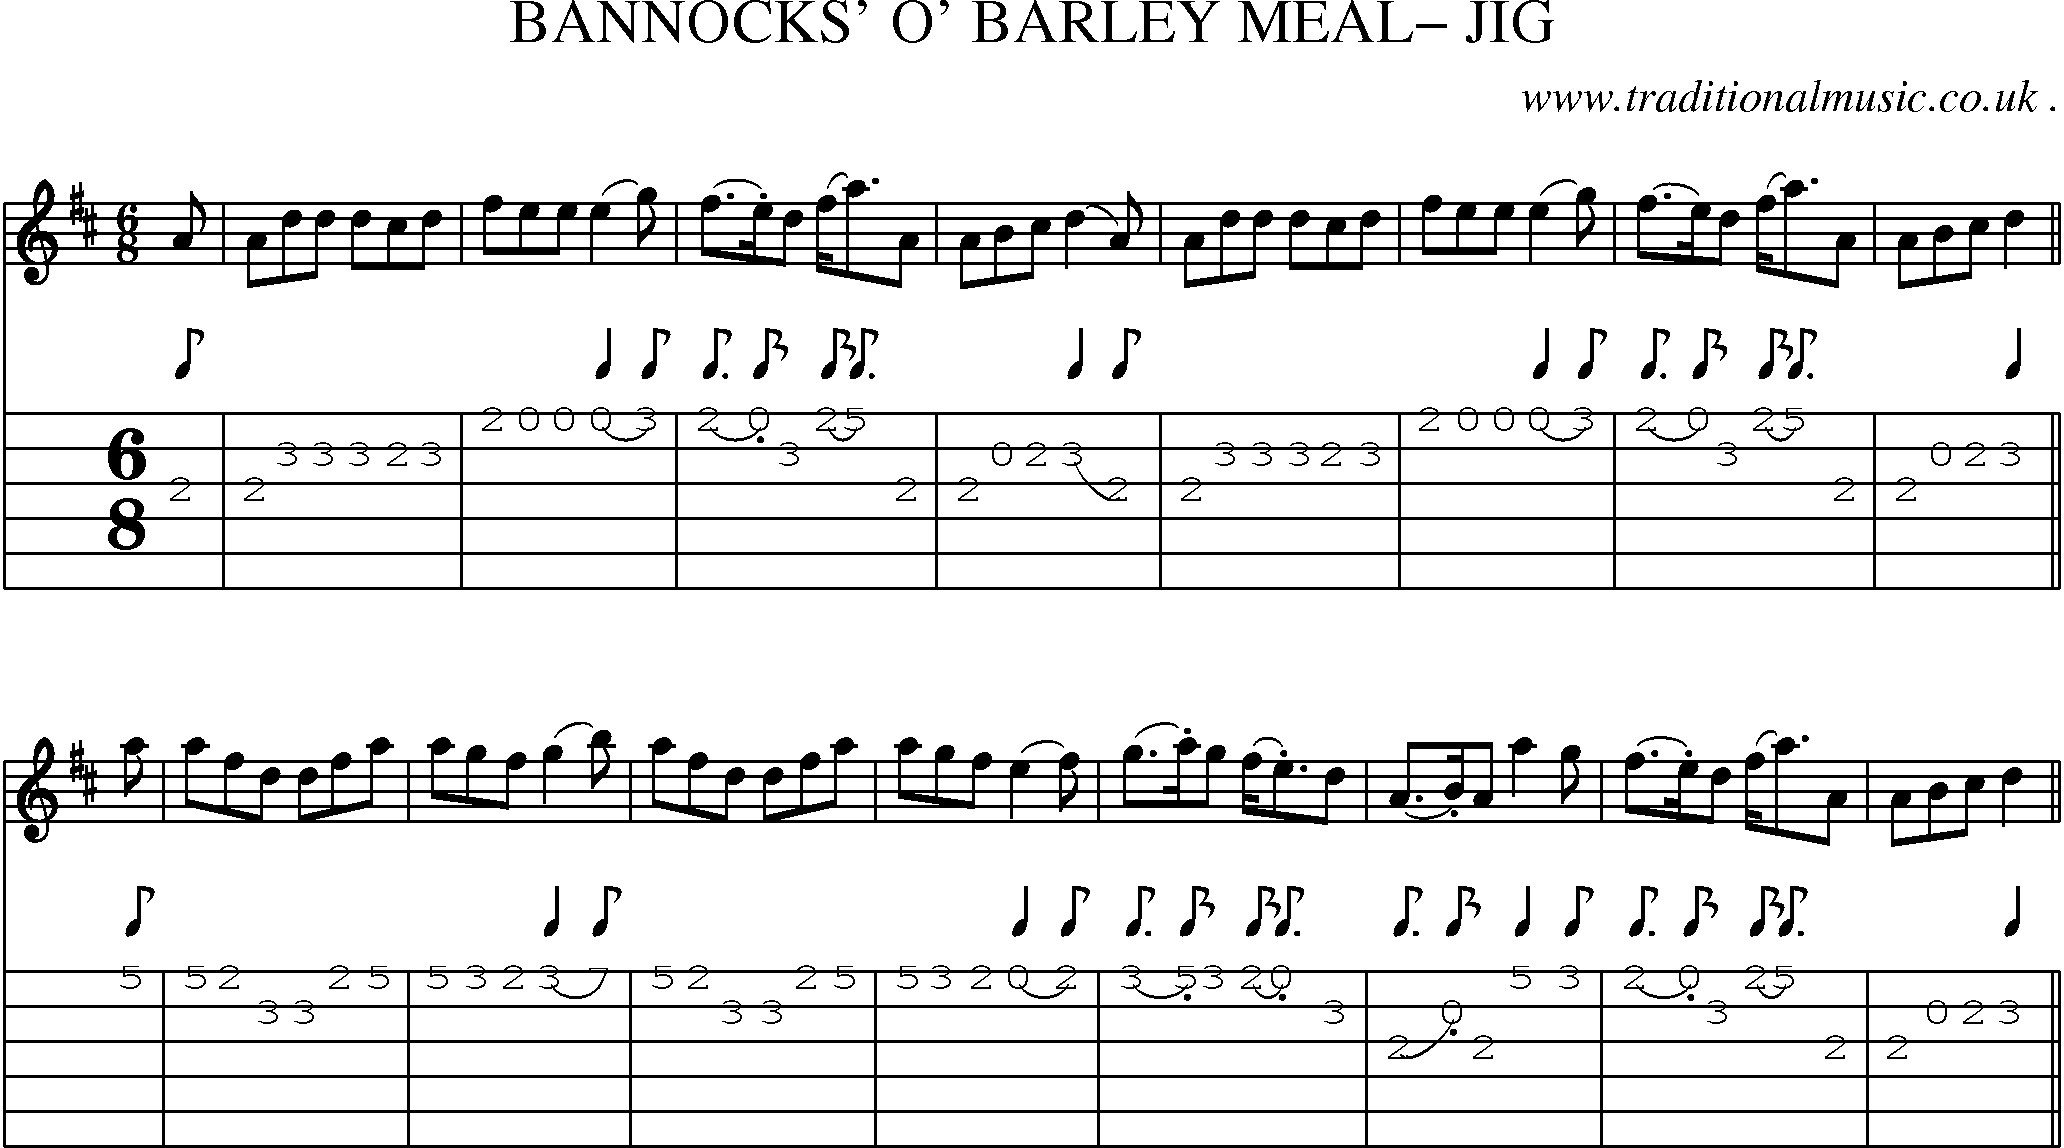 Sheet-Music and Guitar Tabs for Bannocks O Barley Meal